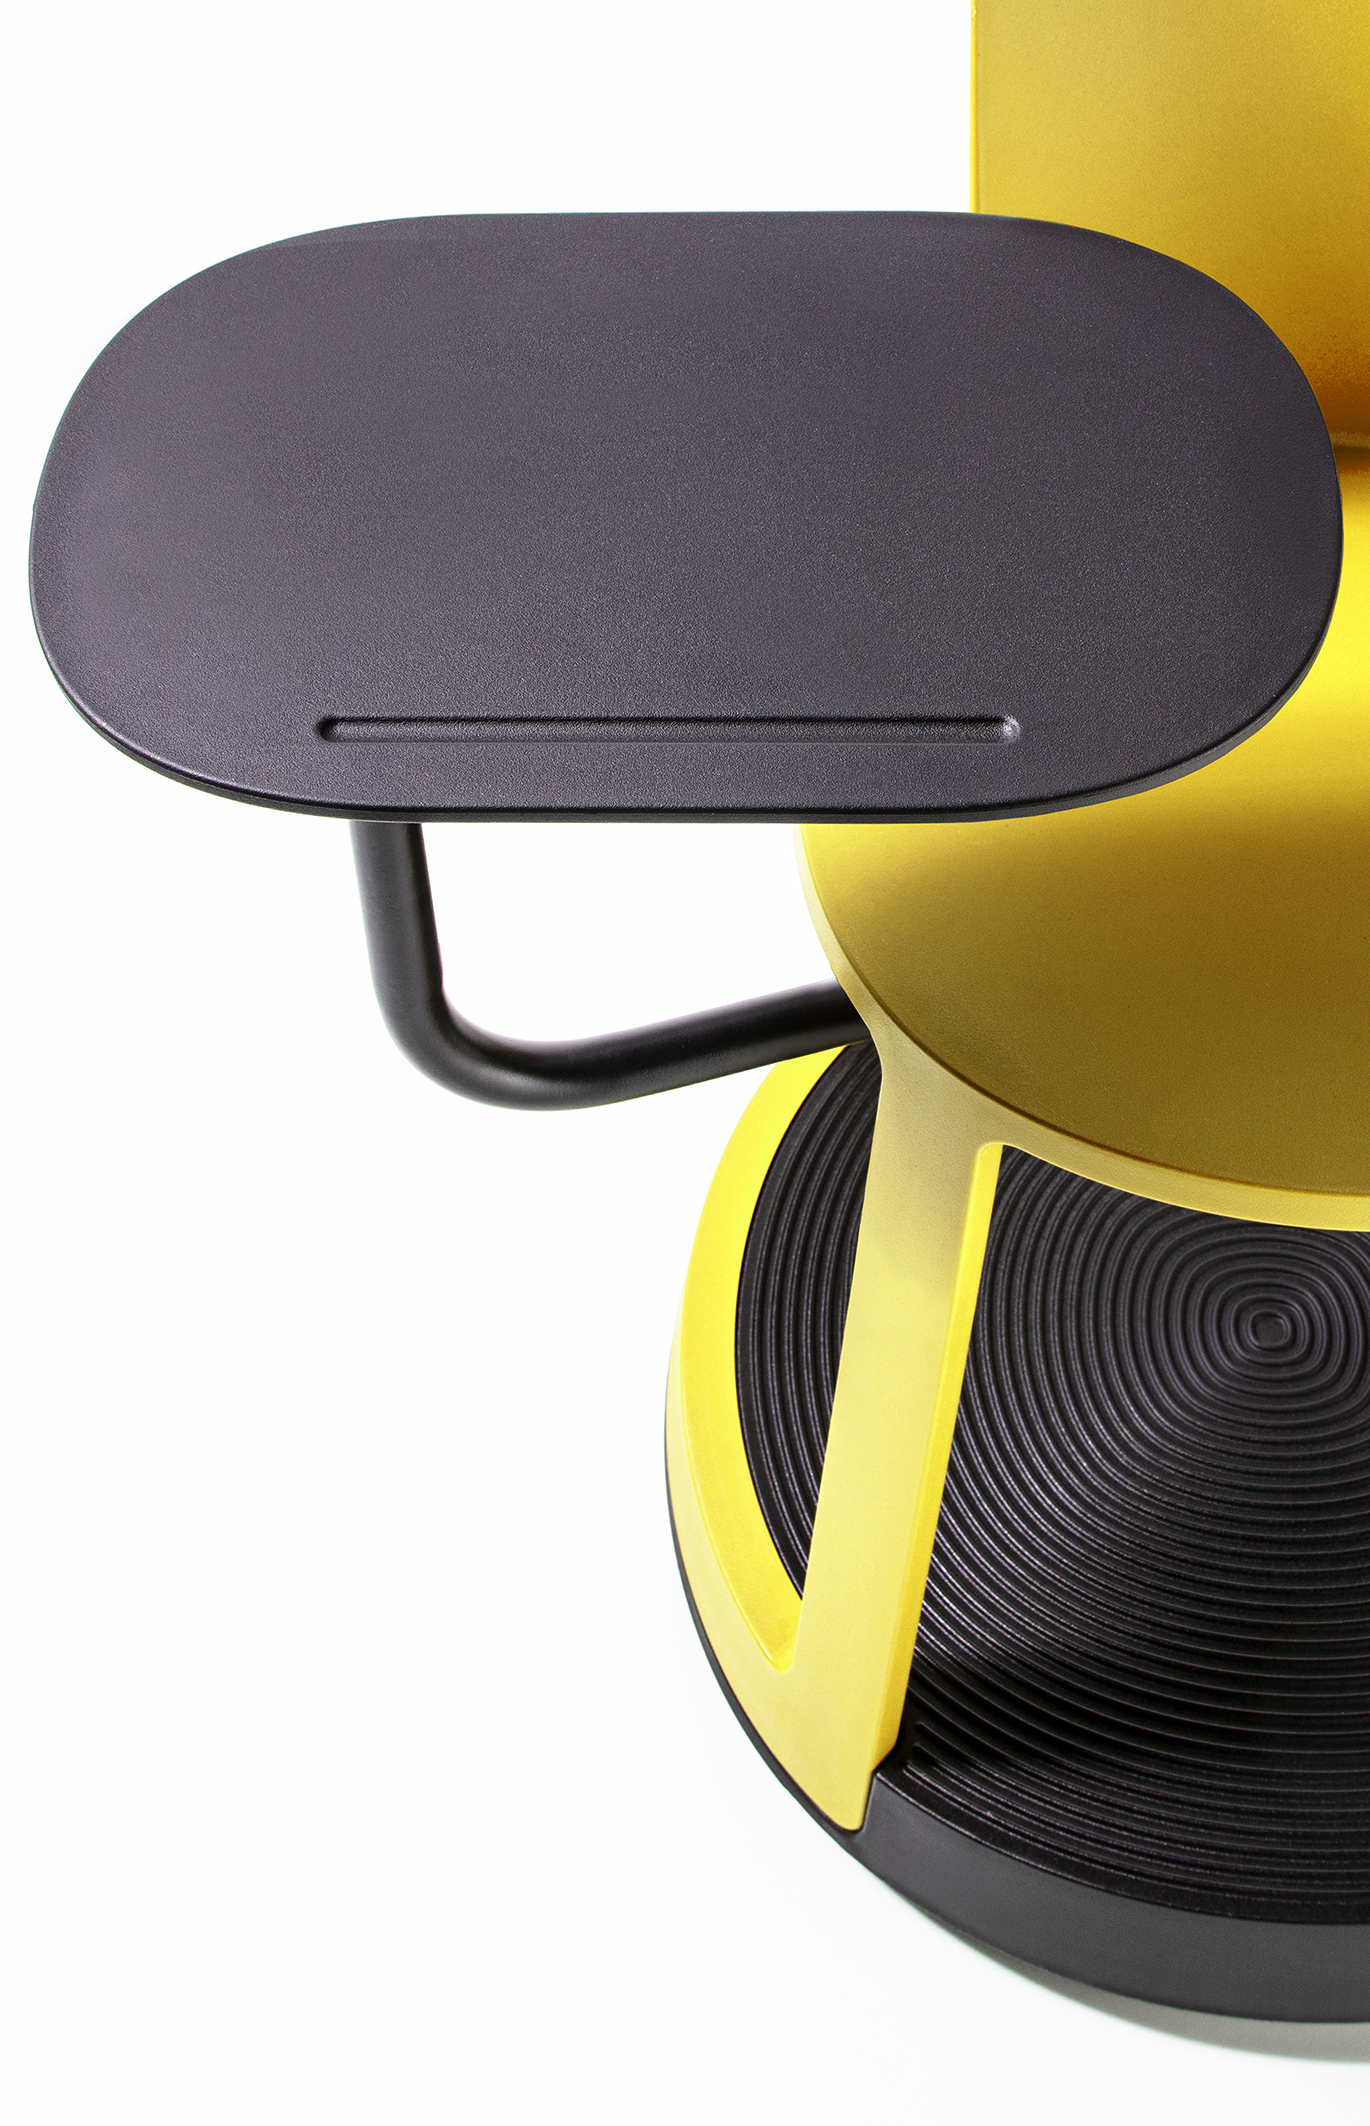 Revo - An original smart chair for office, smart office, laboratory.